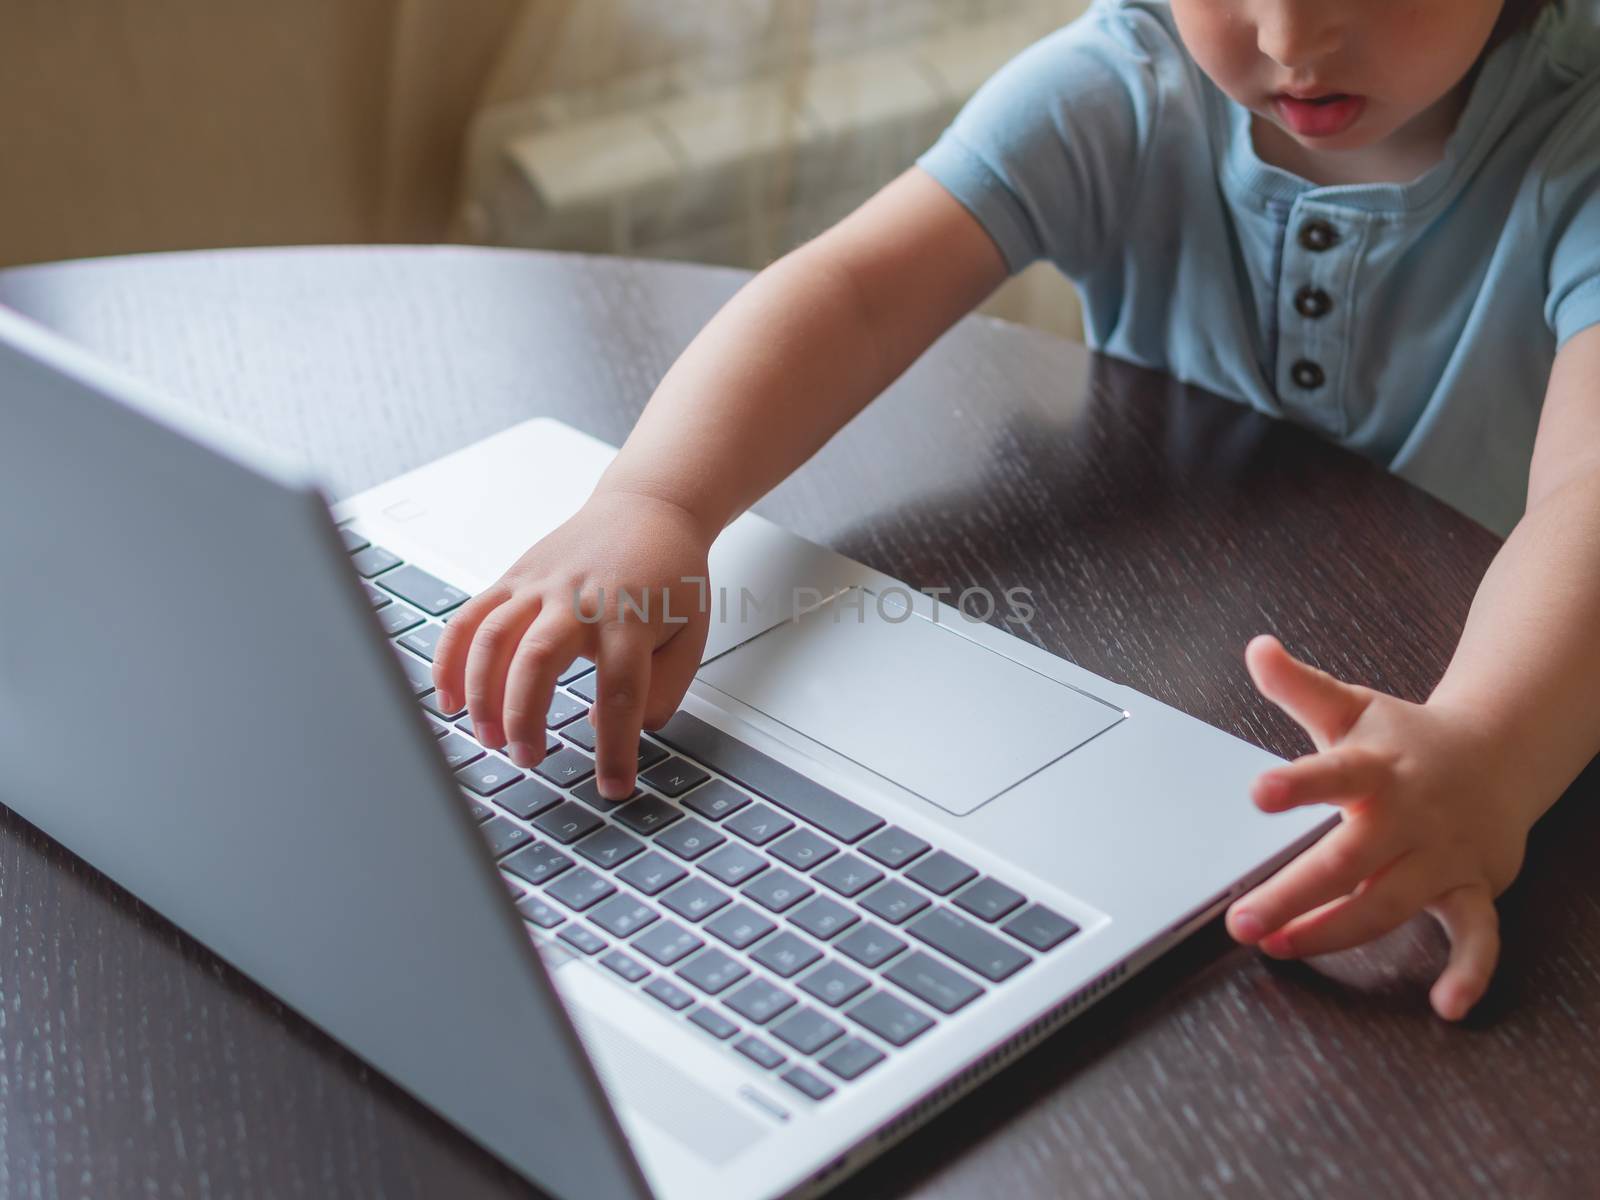 Child explores silver metal laptop. Curious toddler boy presses buttons.